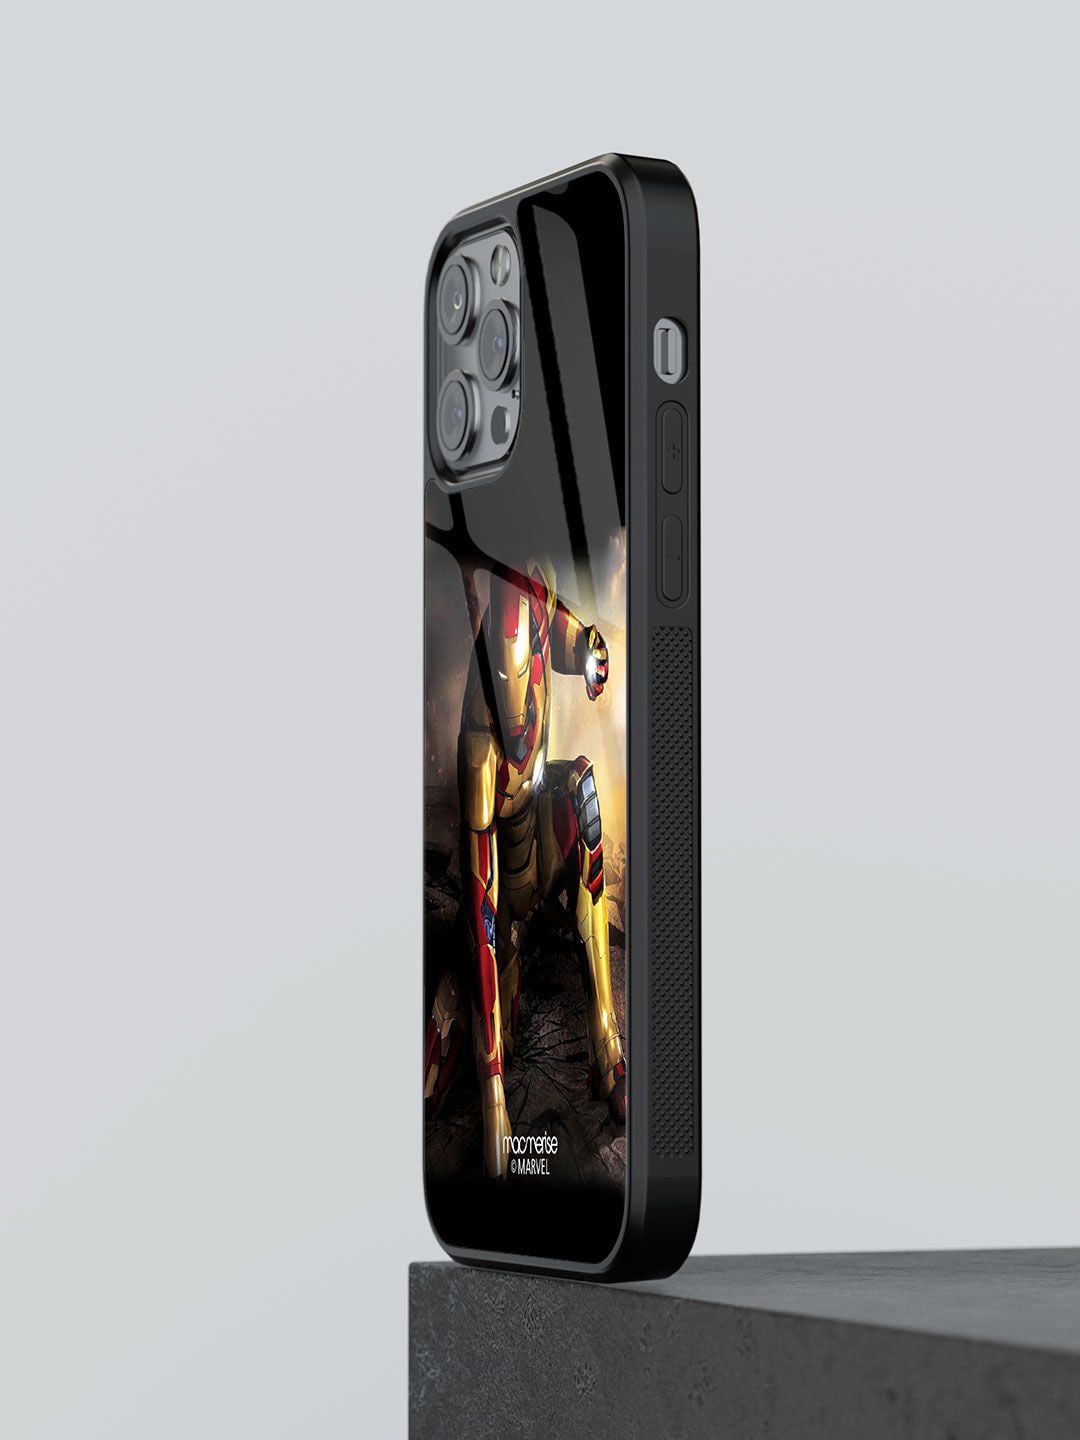 macmerise Black Iron Man Printed Camo Glass iPhone 12 Pro Max Back Case Price in India